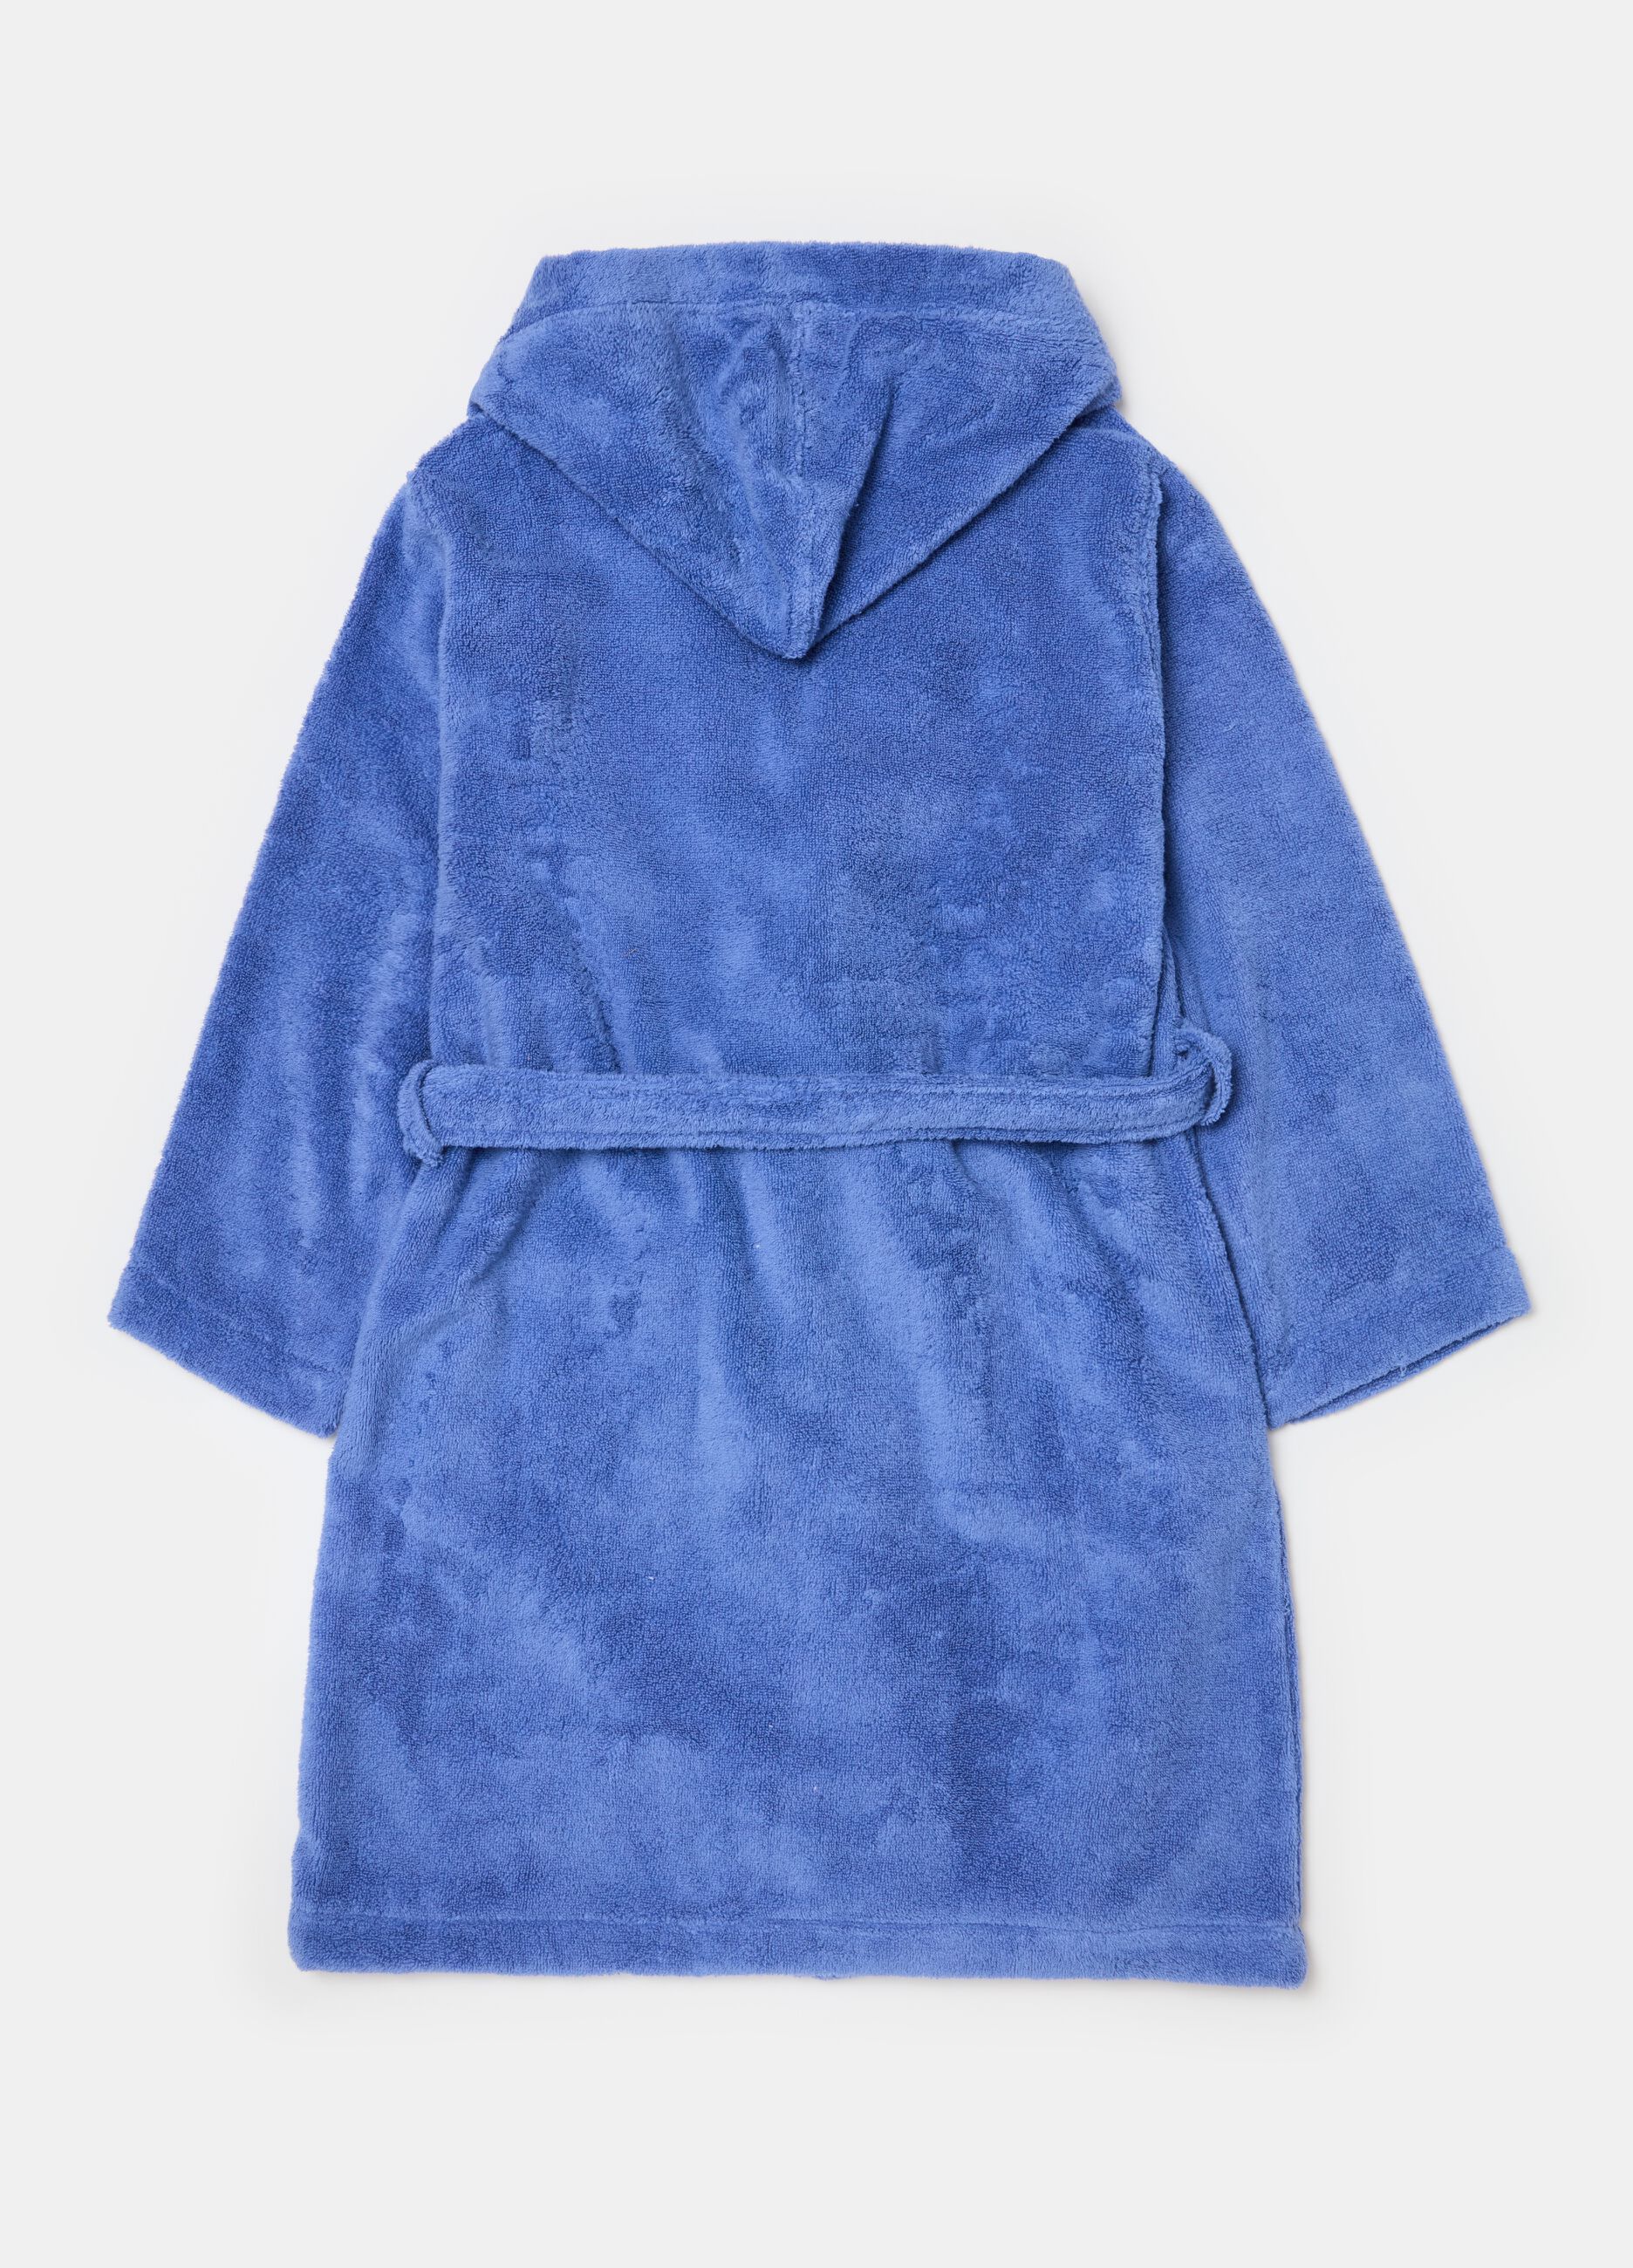 Solid colour bathrobe size L/XL